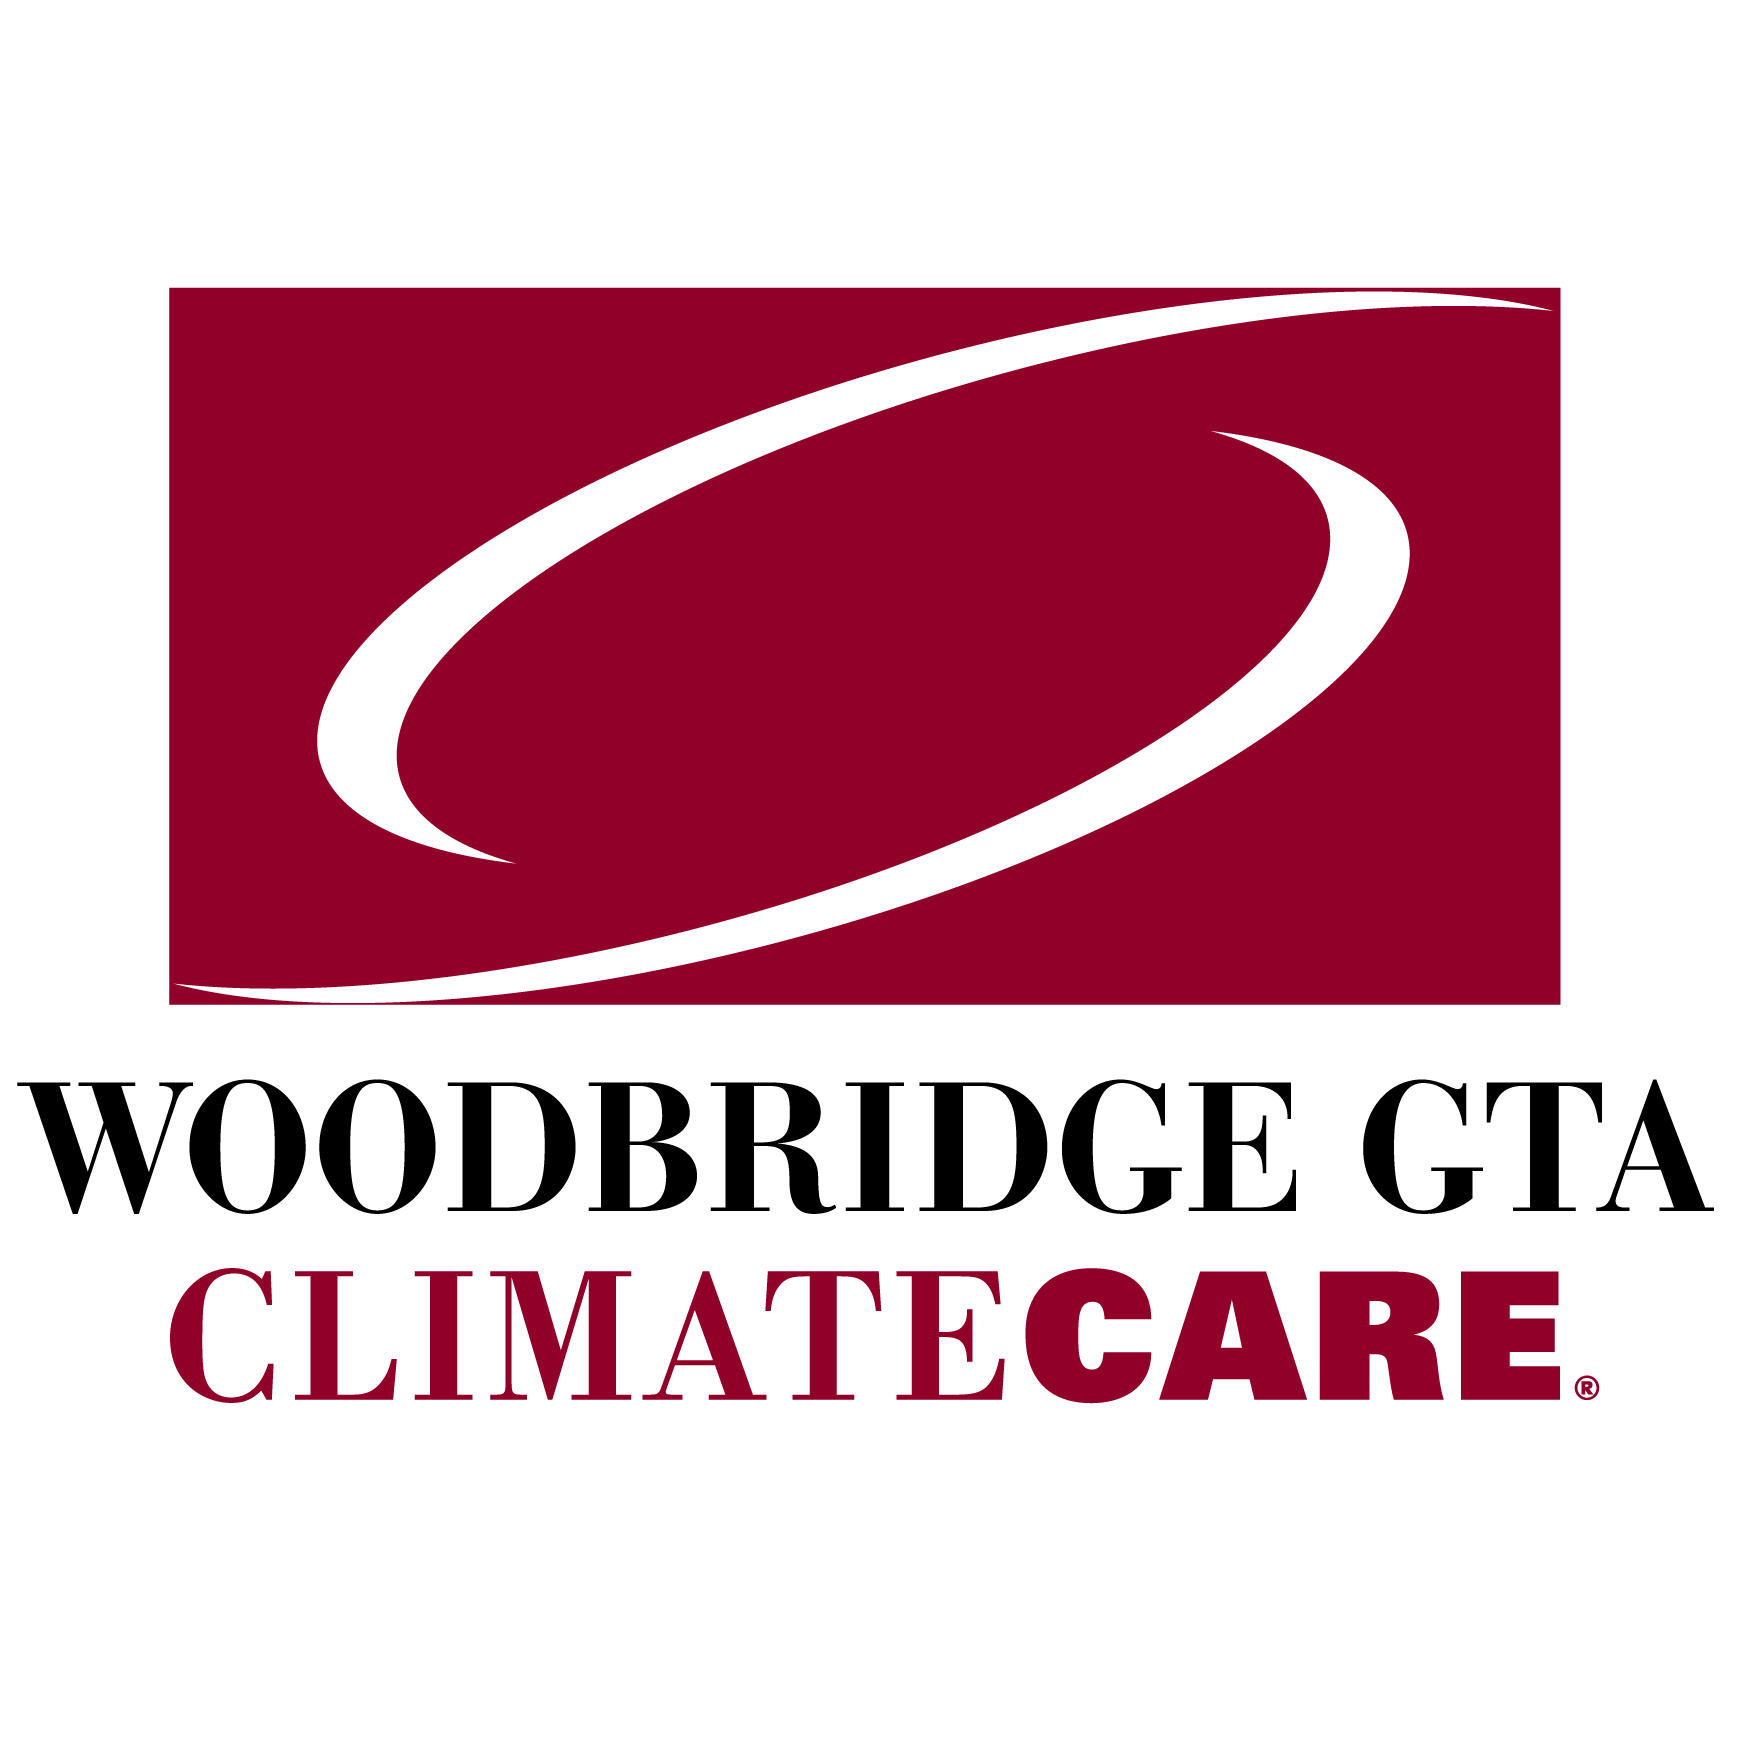 Woodbridge GTA ClimateCare Vaughan